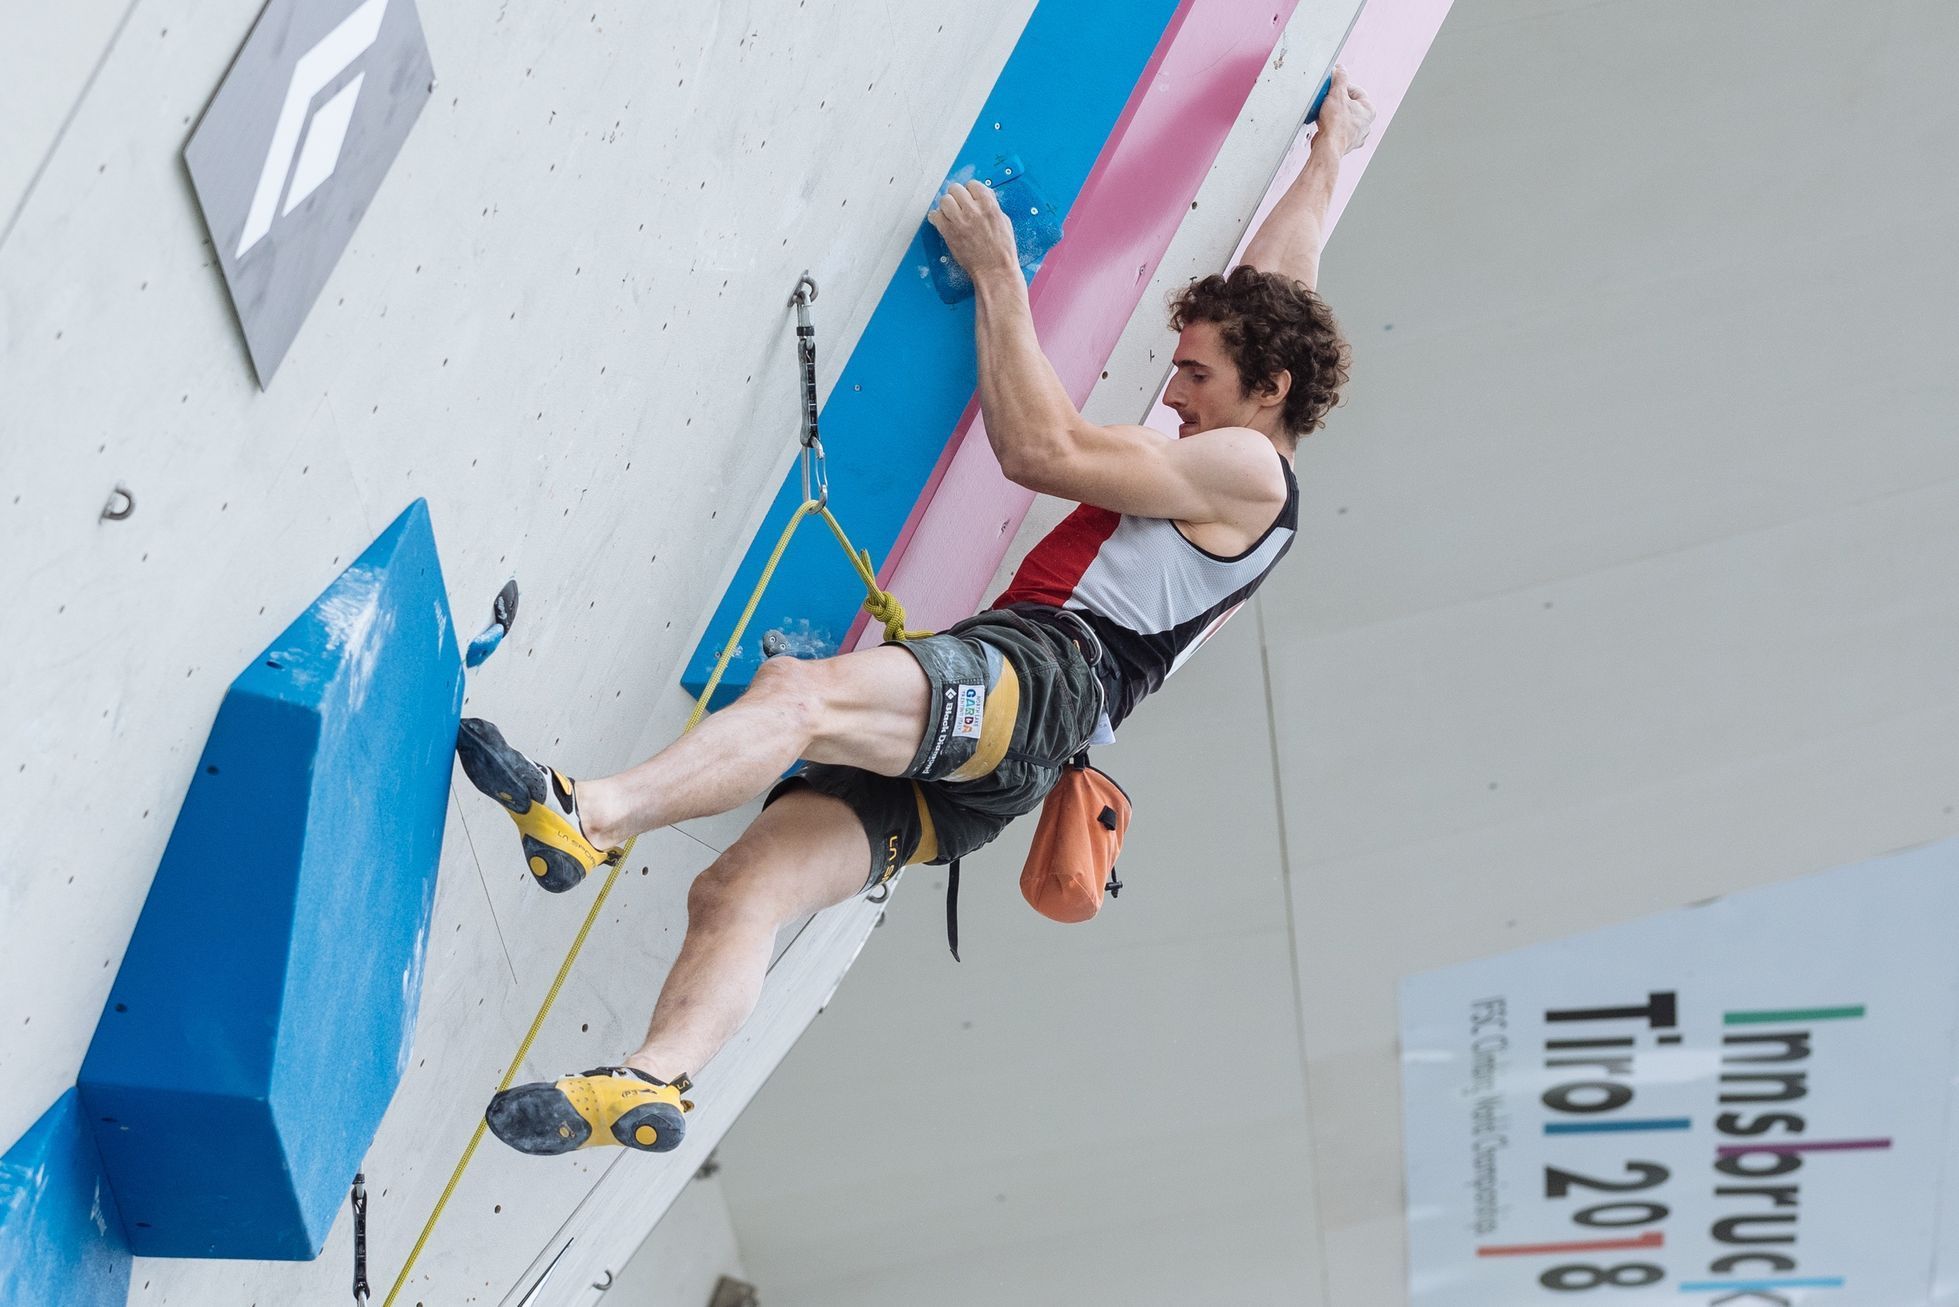 MS v lezení Innsbruck 2018: Adam Ondra